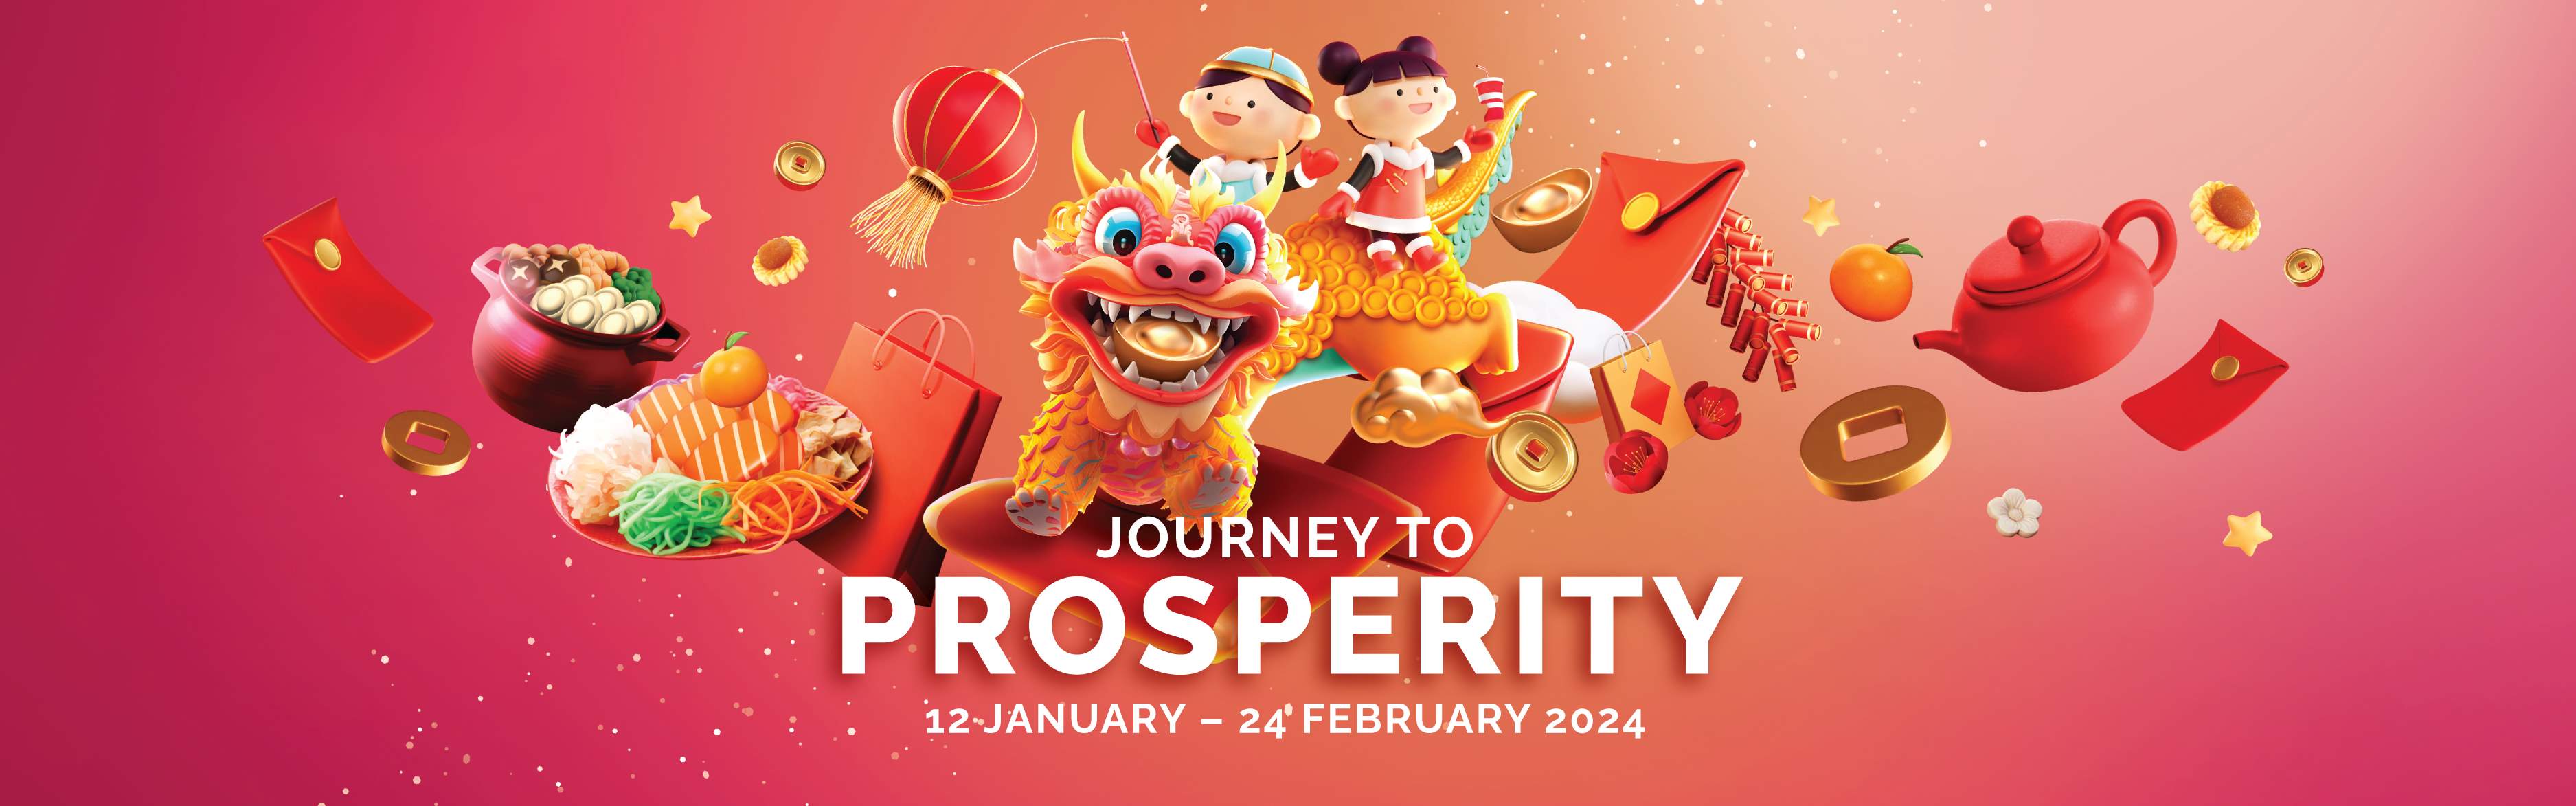 journey to prosperity